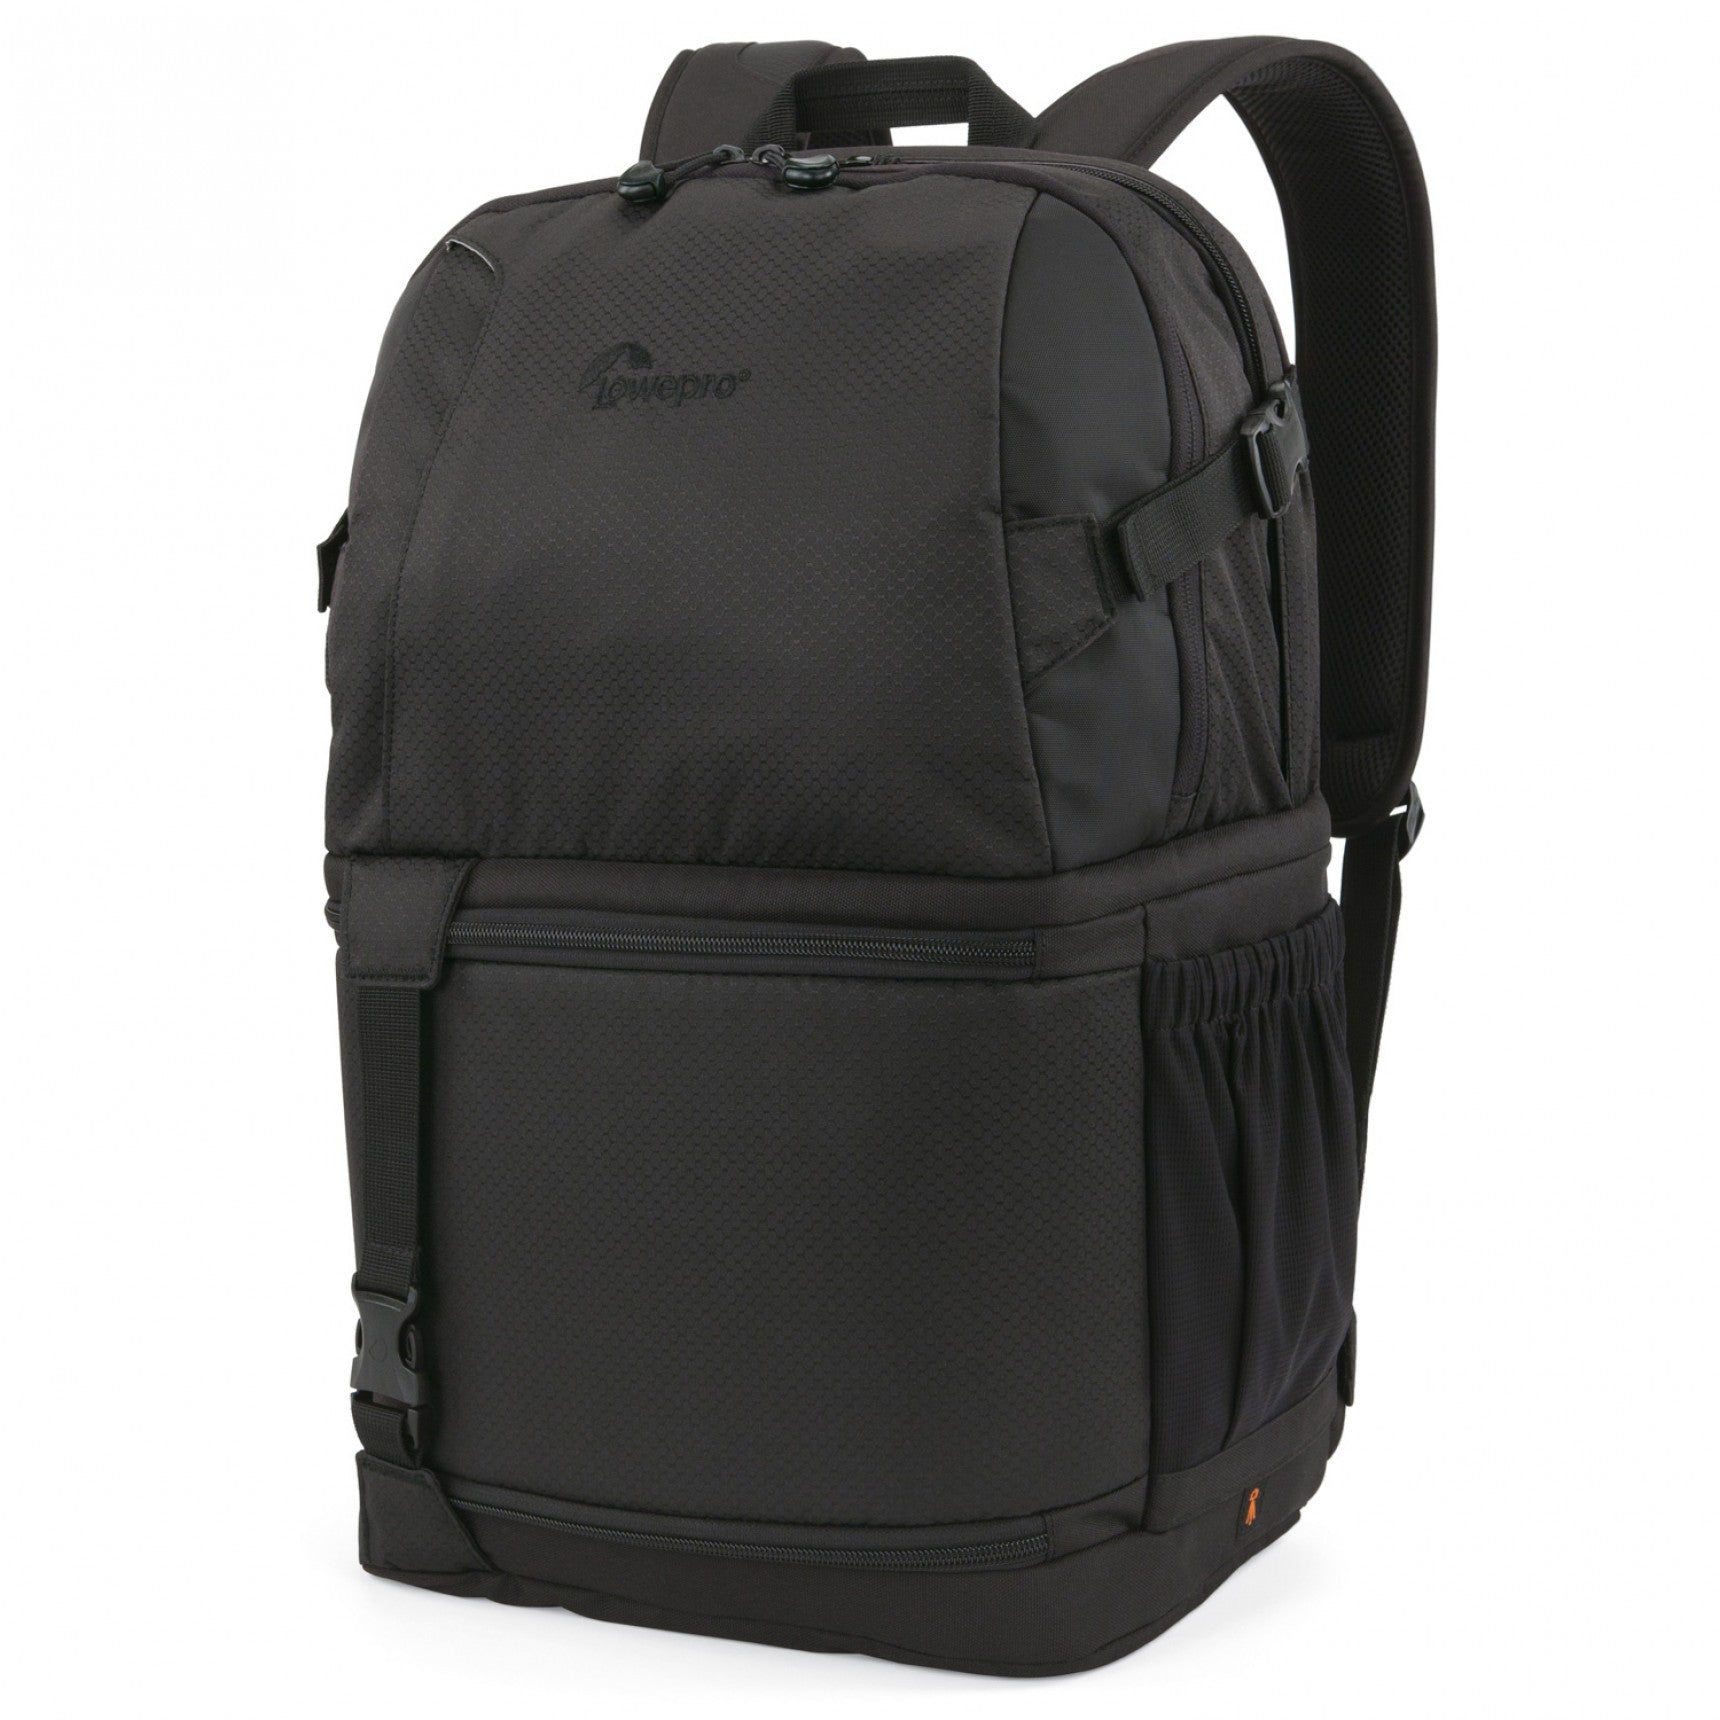 Lowepro DSLR Video Fastpack 350 Black, discontinued, Lowepro - Pictureline  - 1